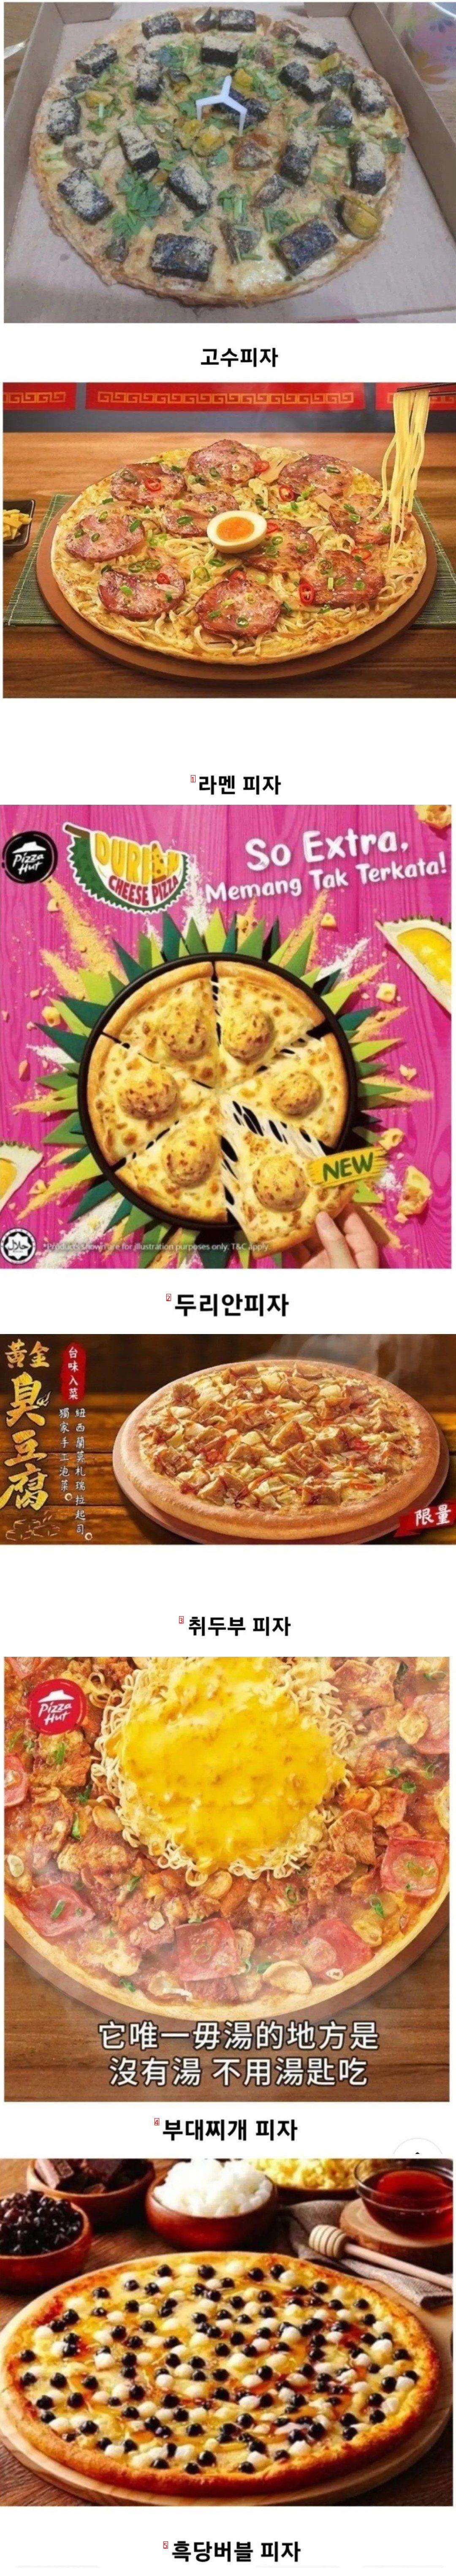 Taiwan's Terrifying Pizza